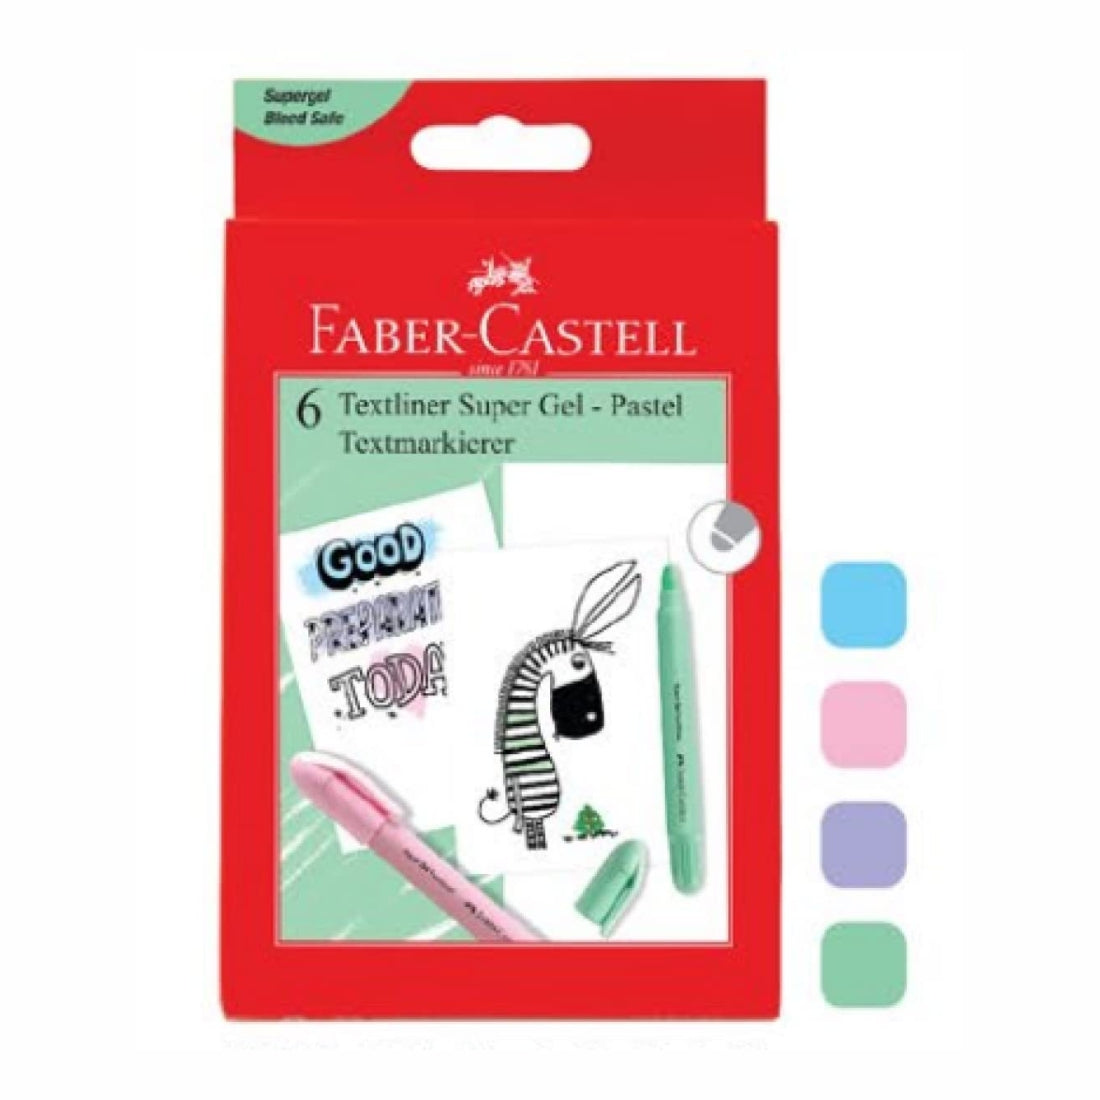 Faber castell Gel Crayon Highlighter - Pastel Shades 6Pc